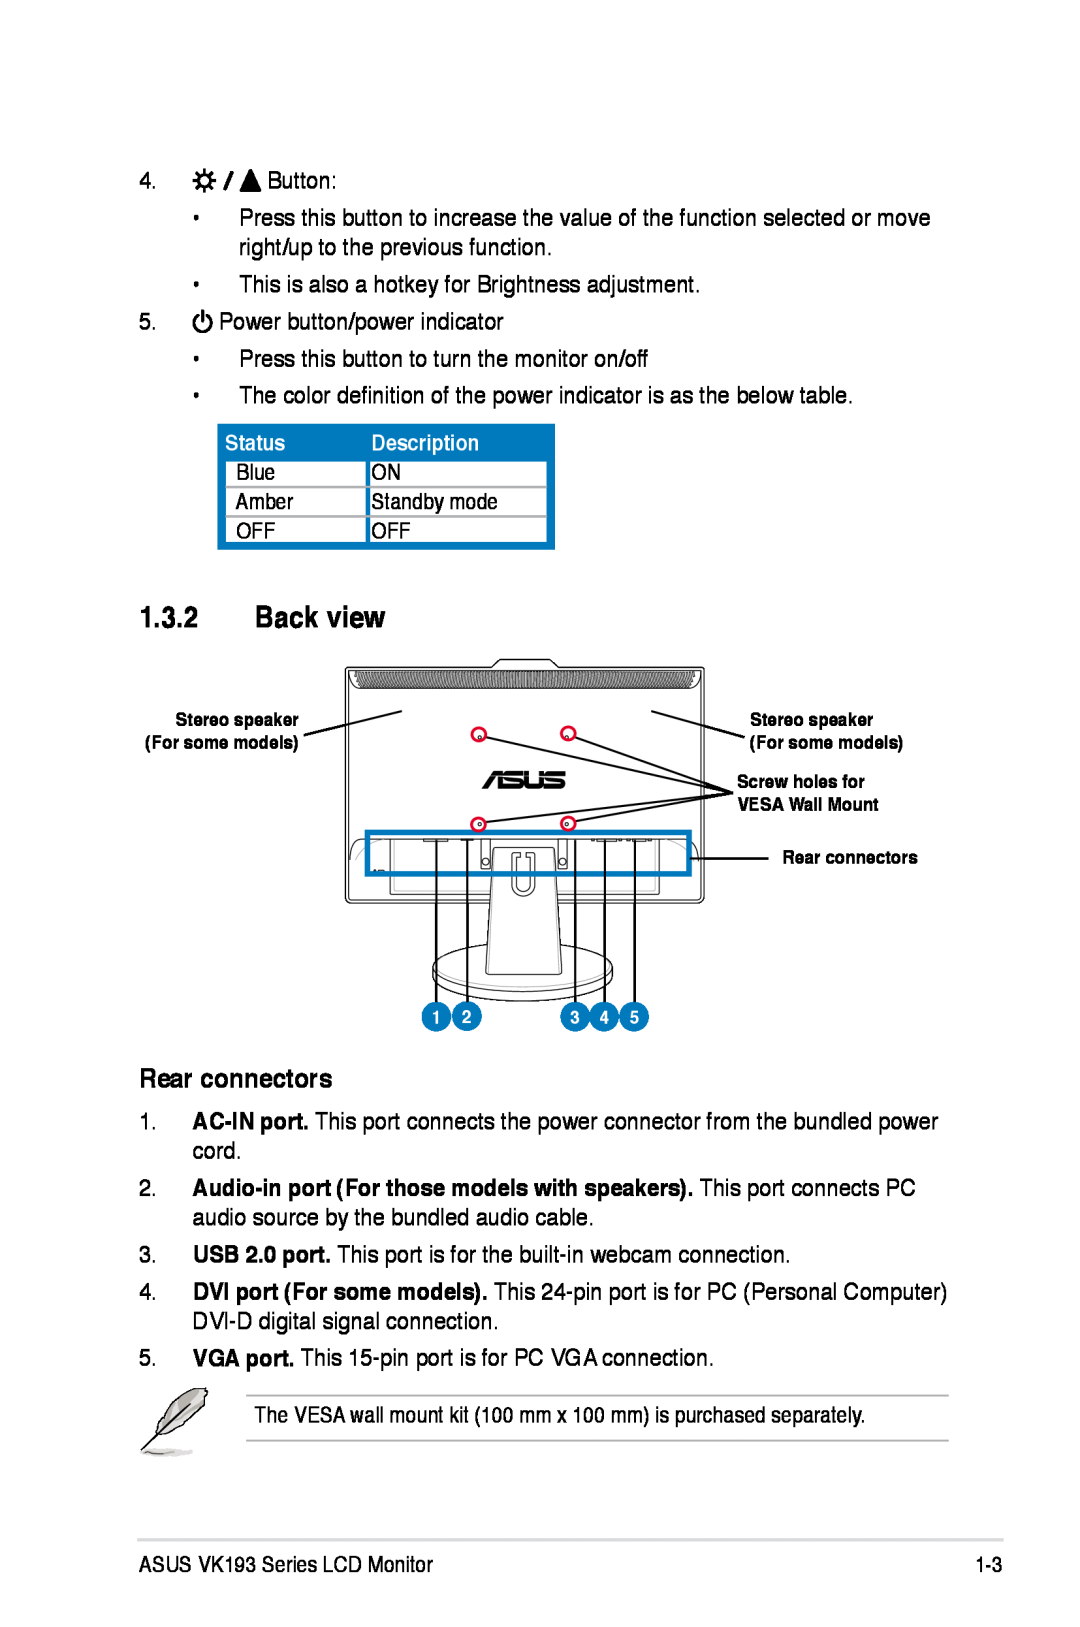 Asus VK193 manual Back view, Rear connectors 